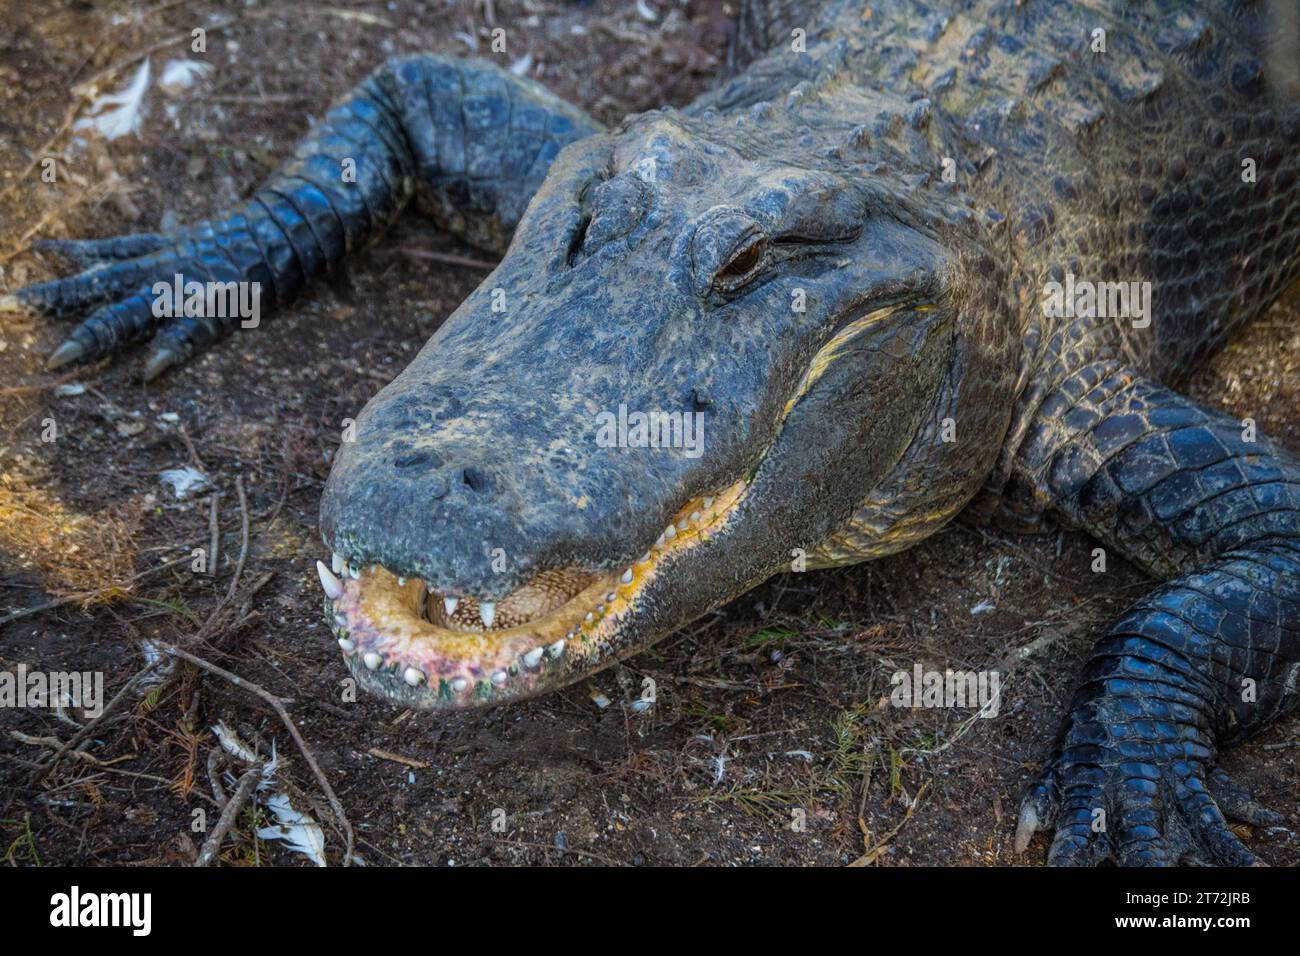 Alligator head close up Stock Photo